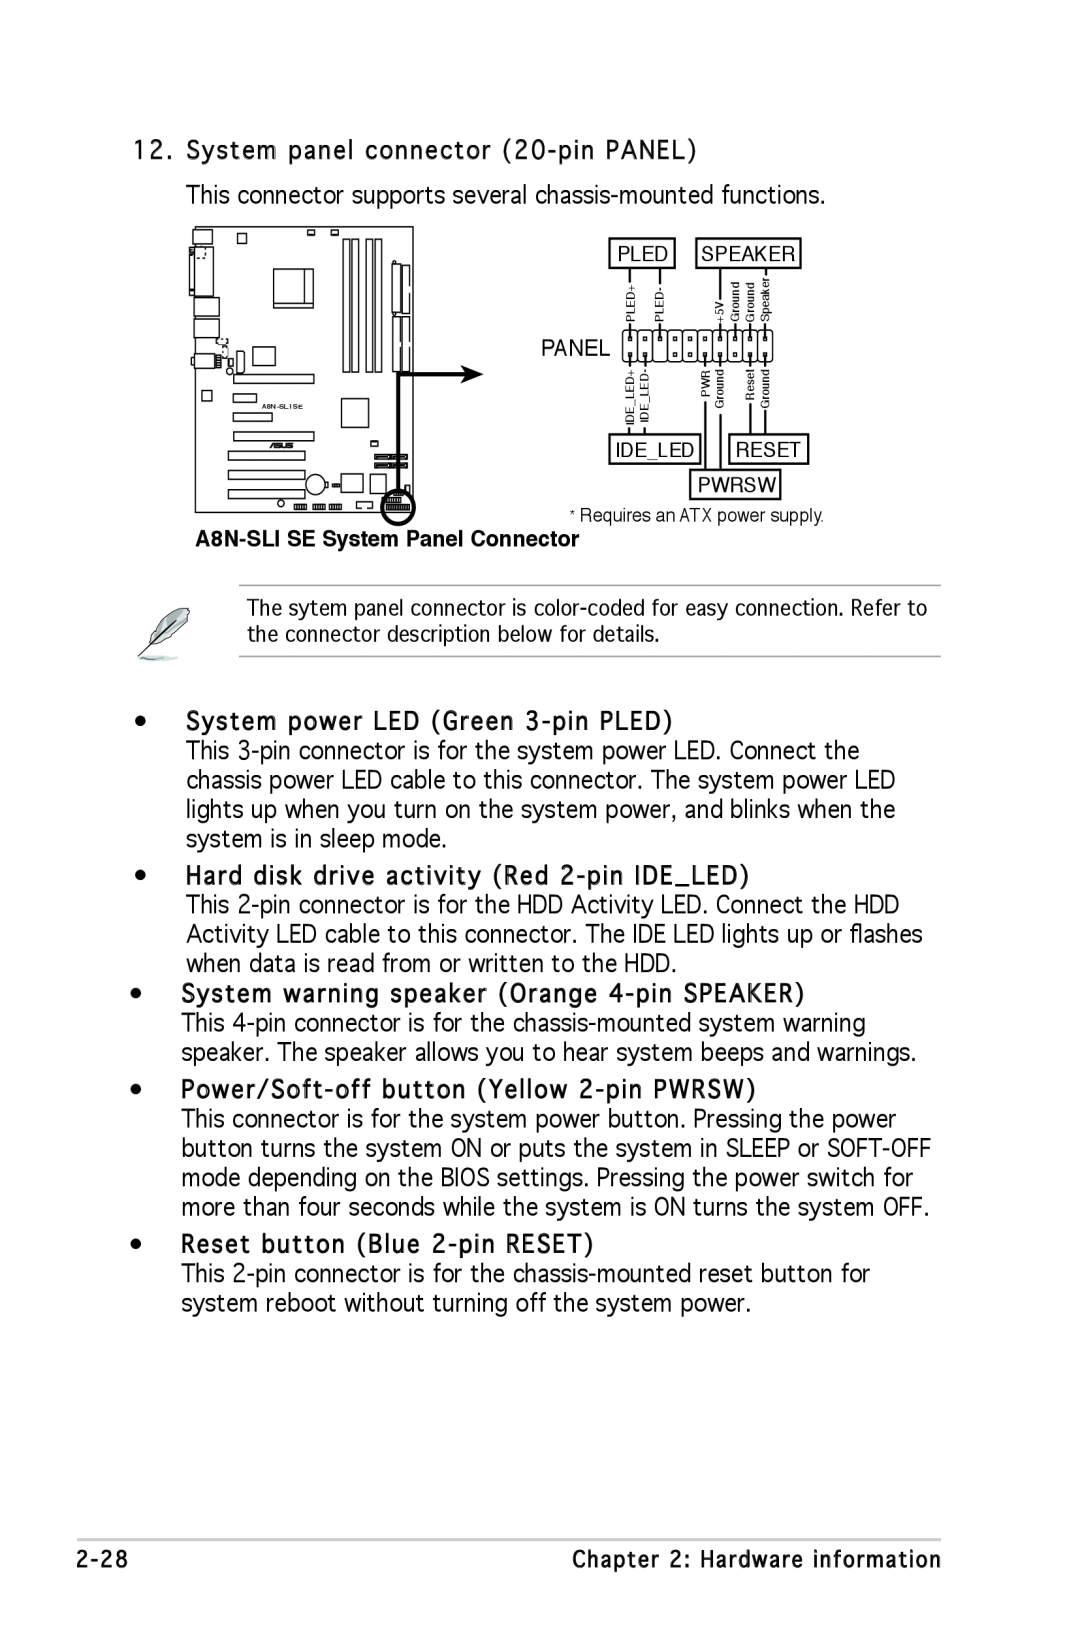 Asus A8N-SLI SE manual System panel connector 20-pin PANEL 